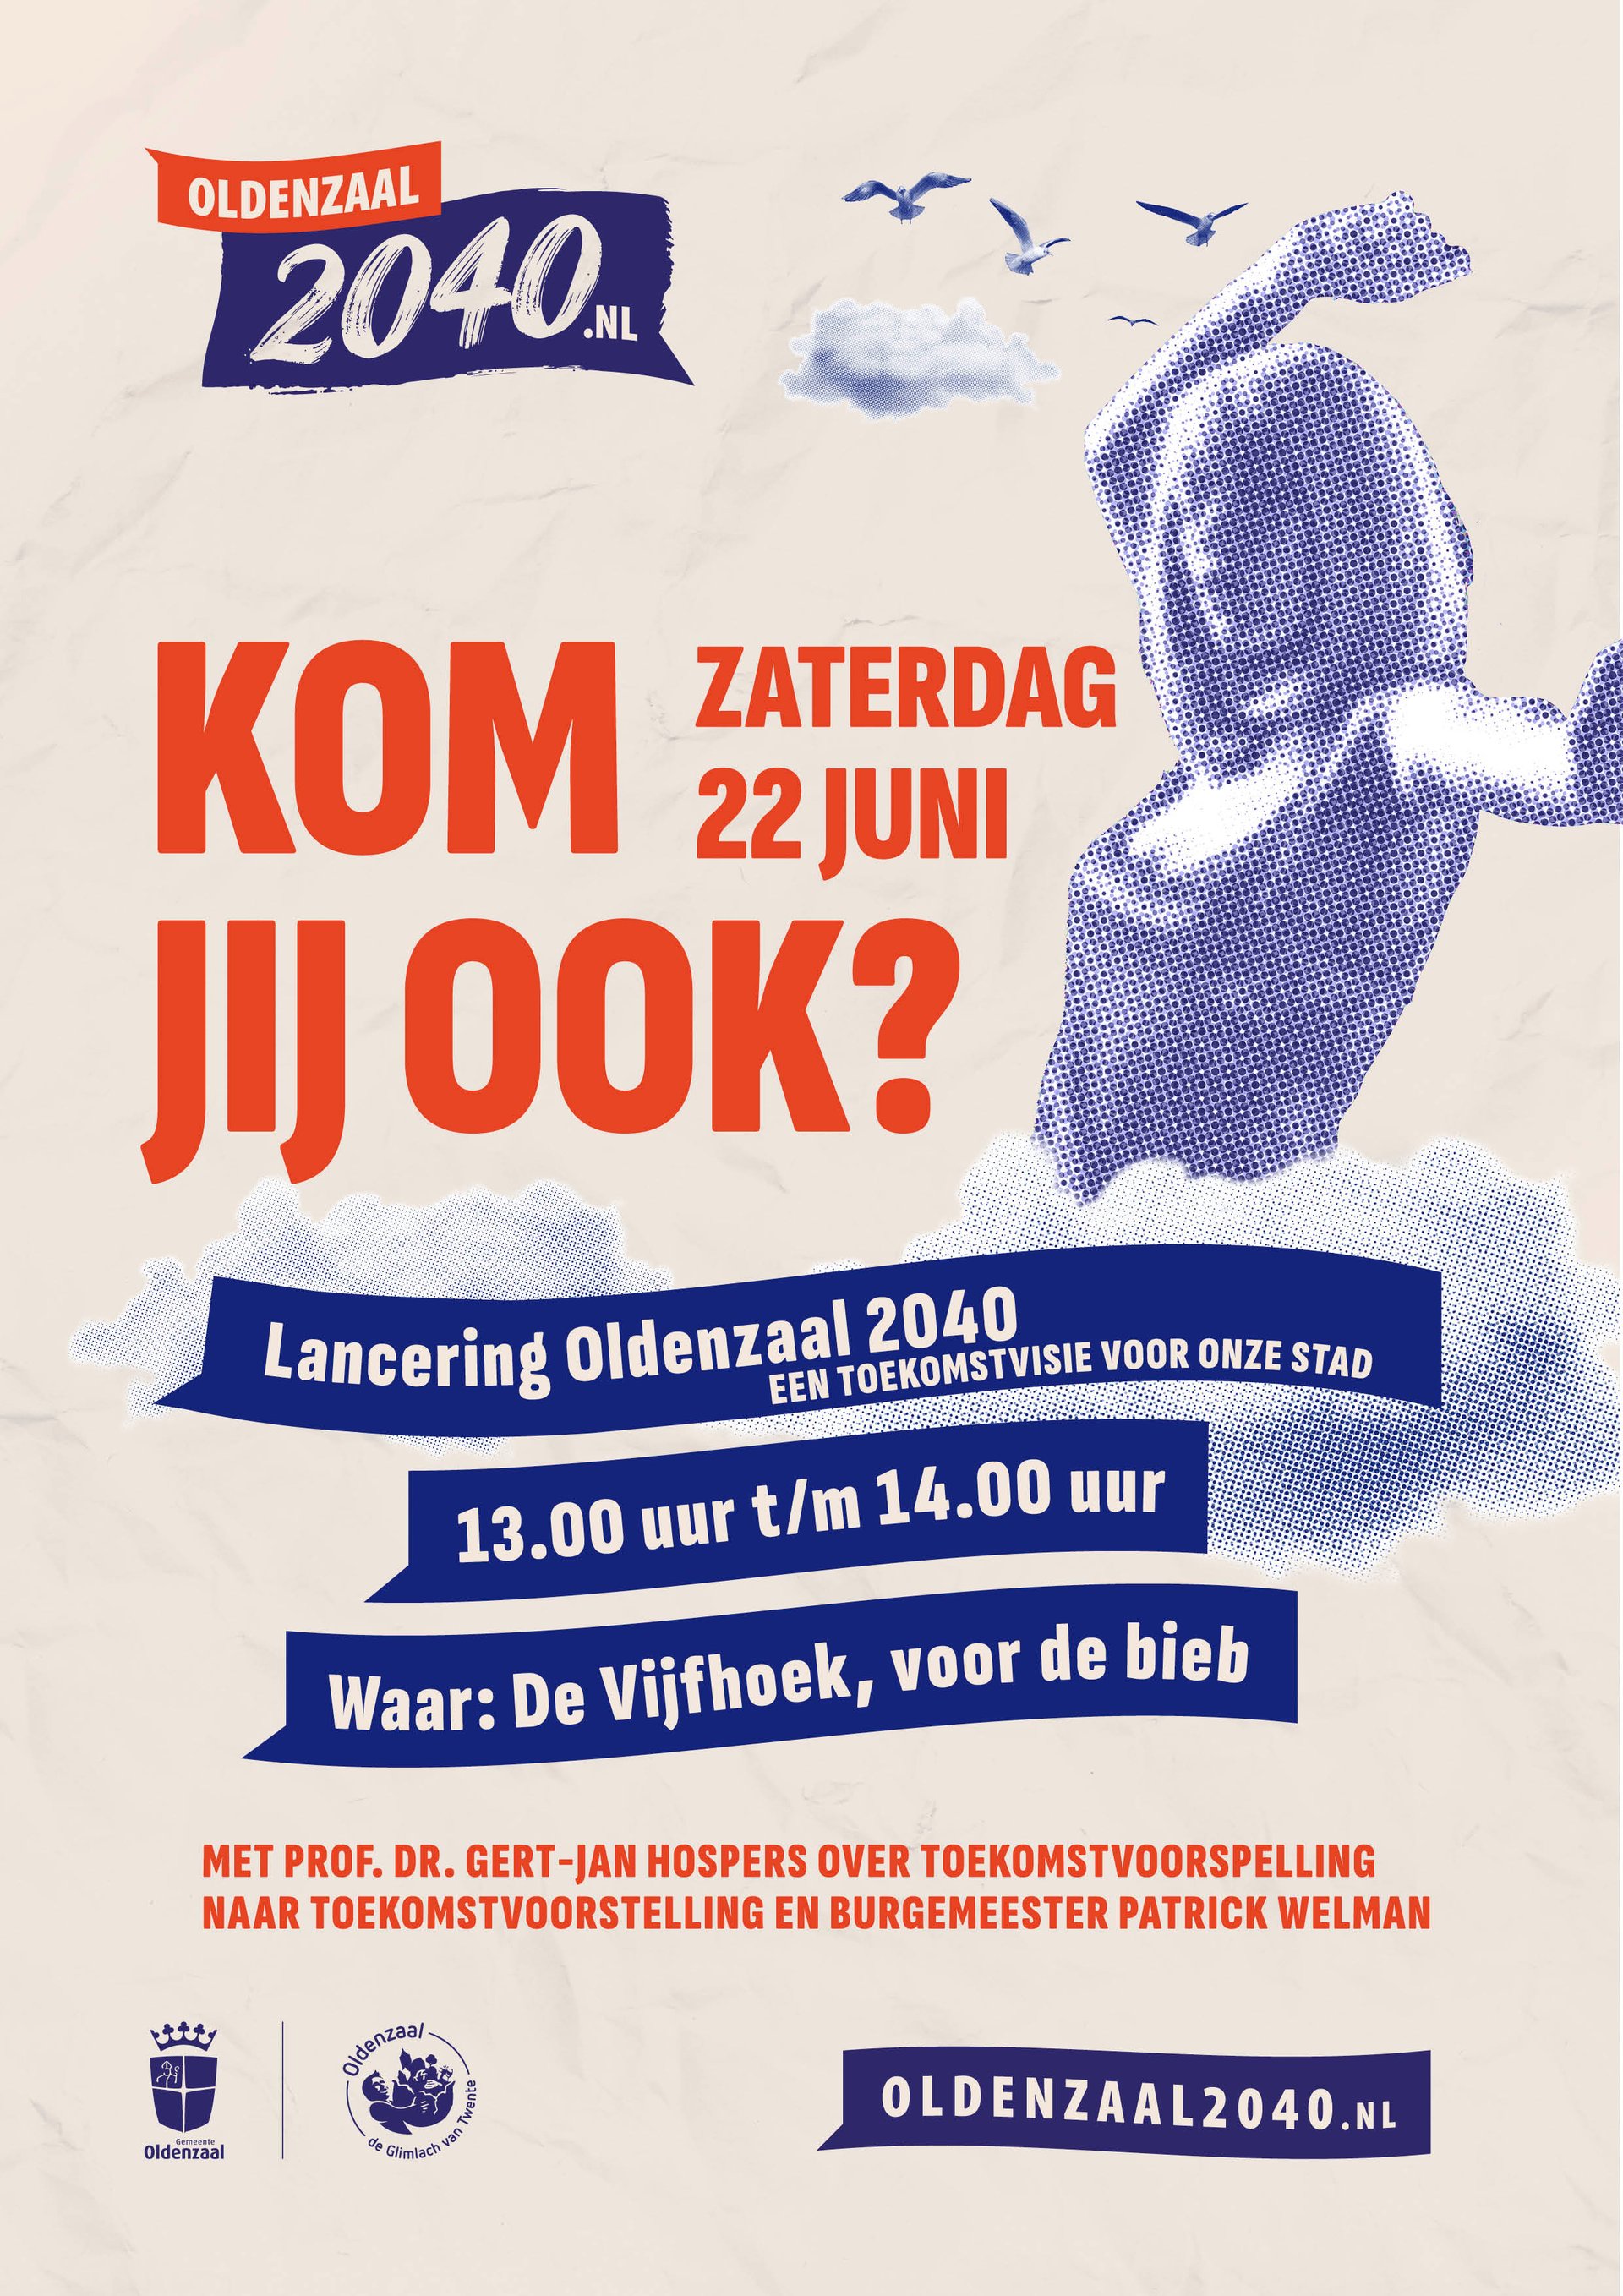 Uitnodiging lancering Oldenzaal 2040